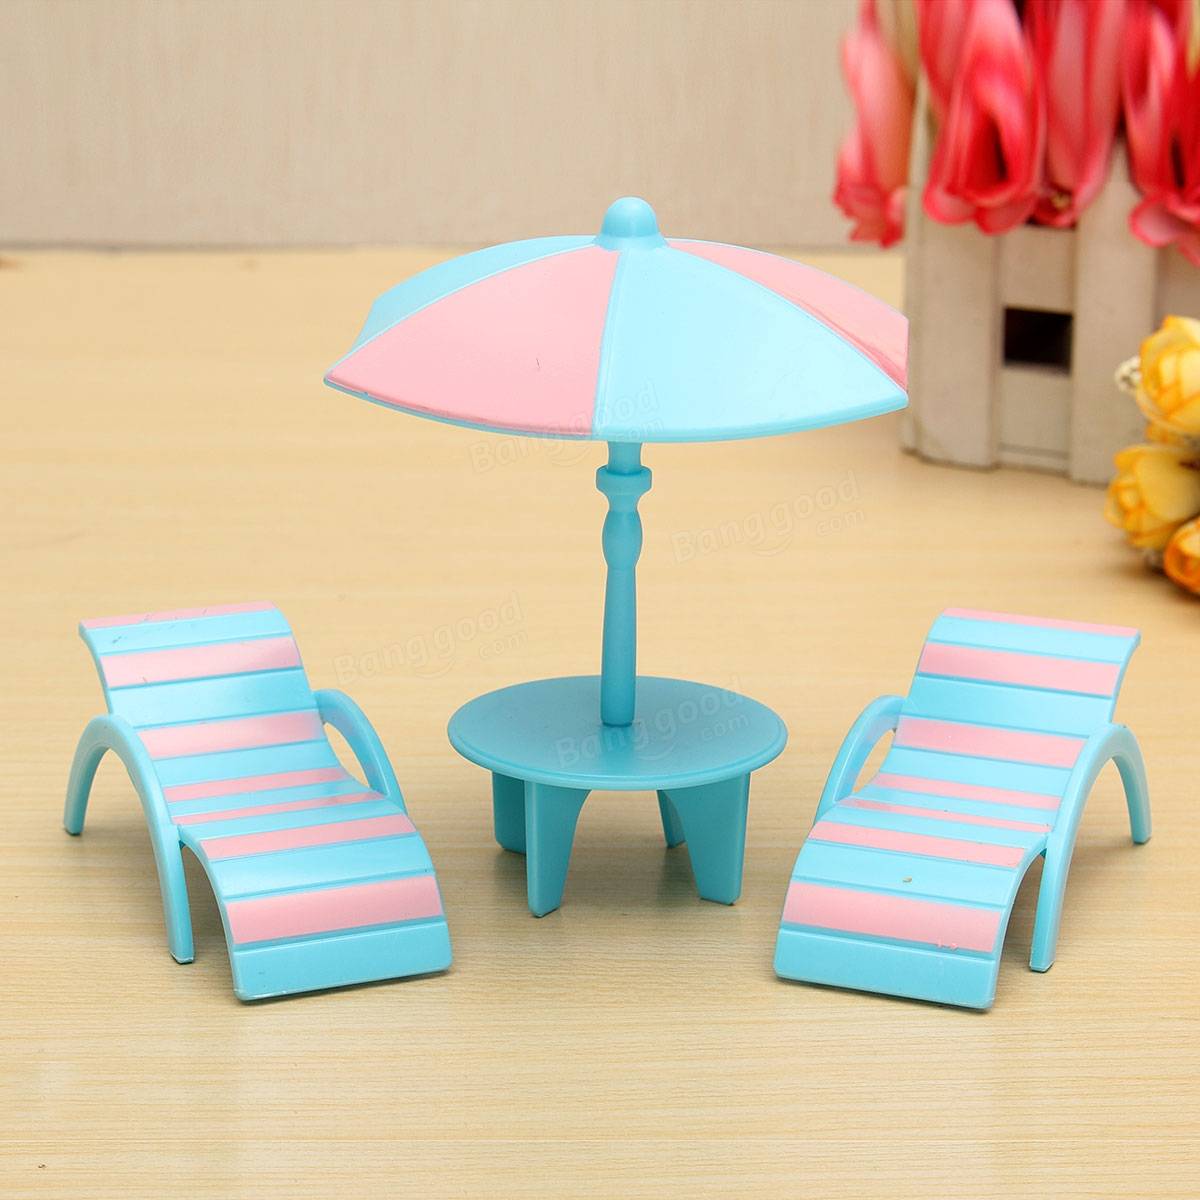 Modern Miniature Beach Chair And Umbrella for Small Space